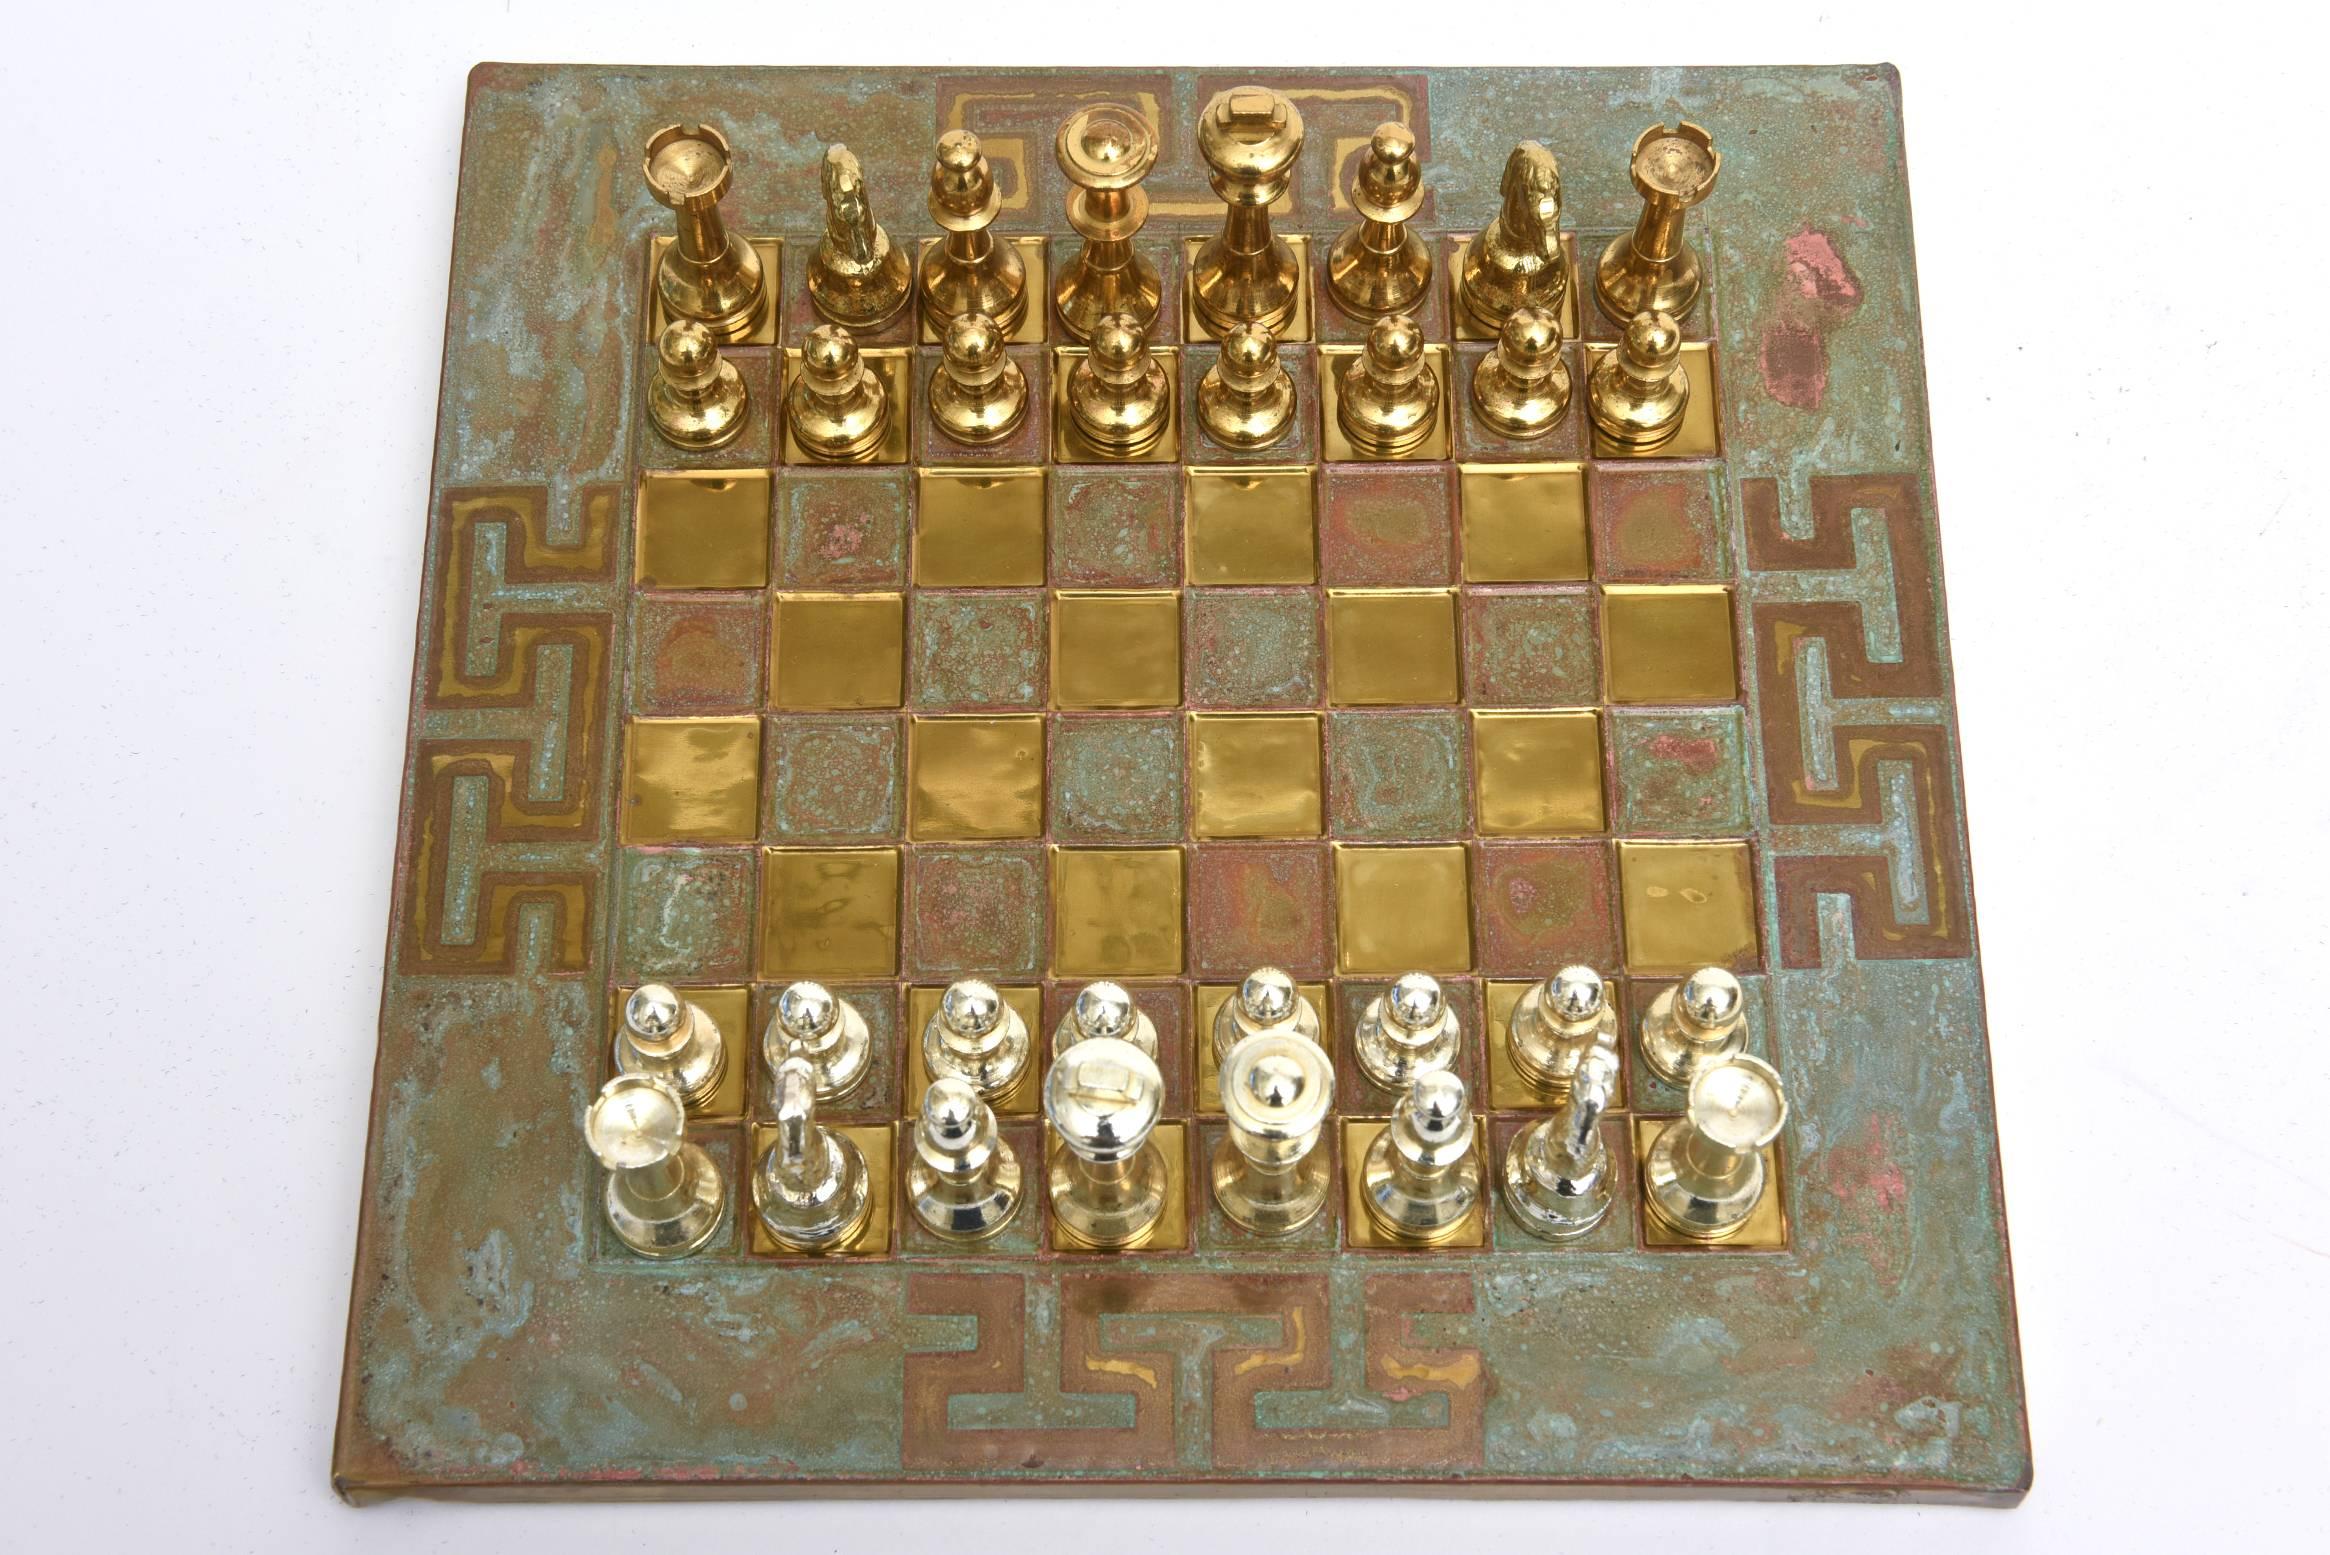  Greek Key Mid-Century Modern Chrome, Brass & Copper Chess Set /SALE 2